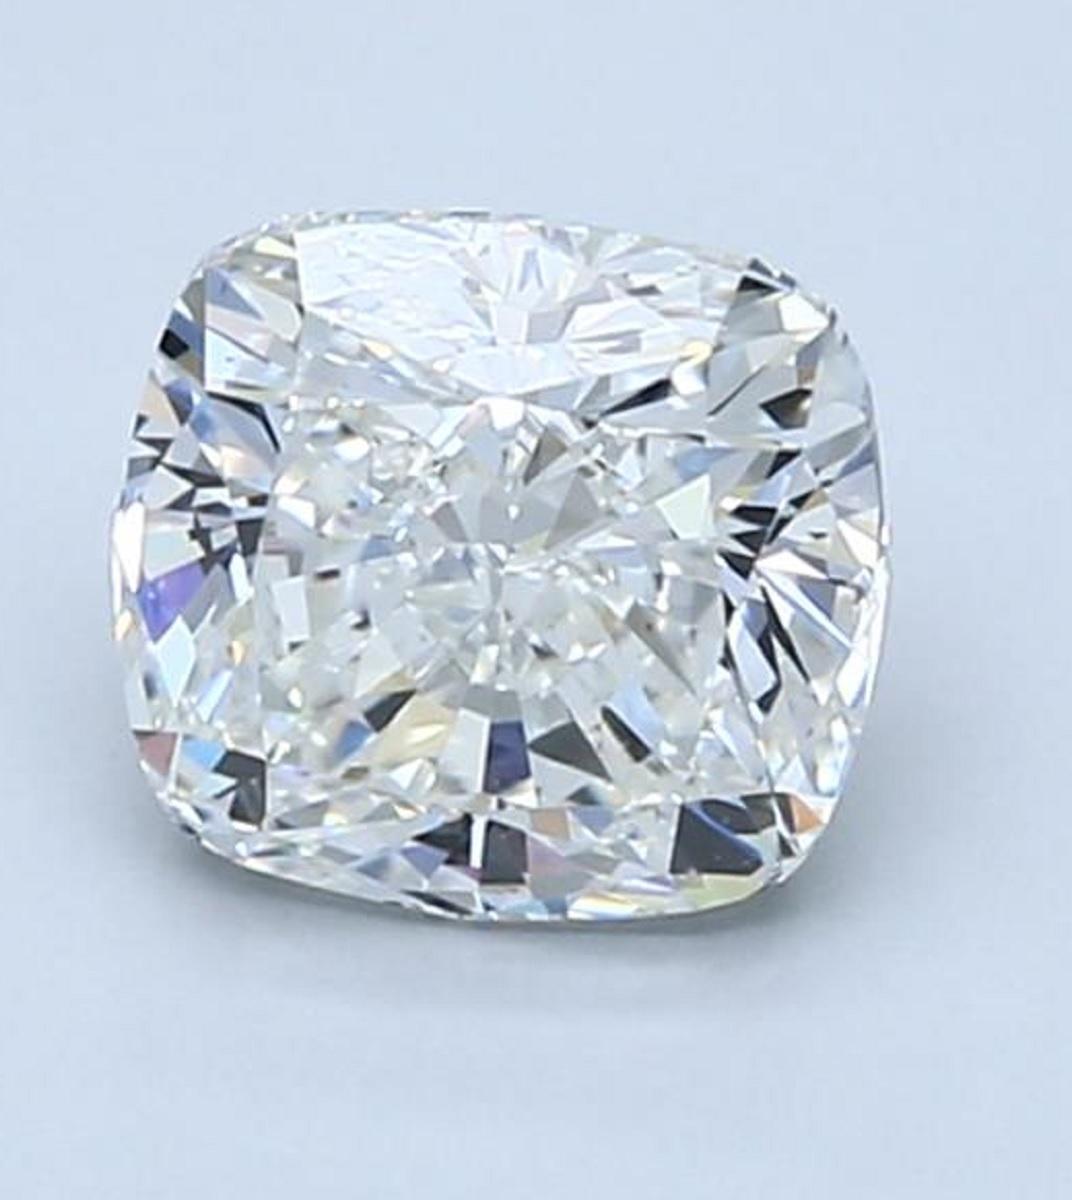 10 carat diamond ring